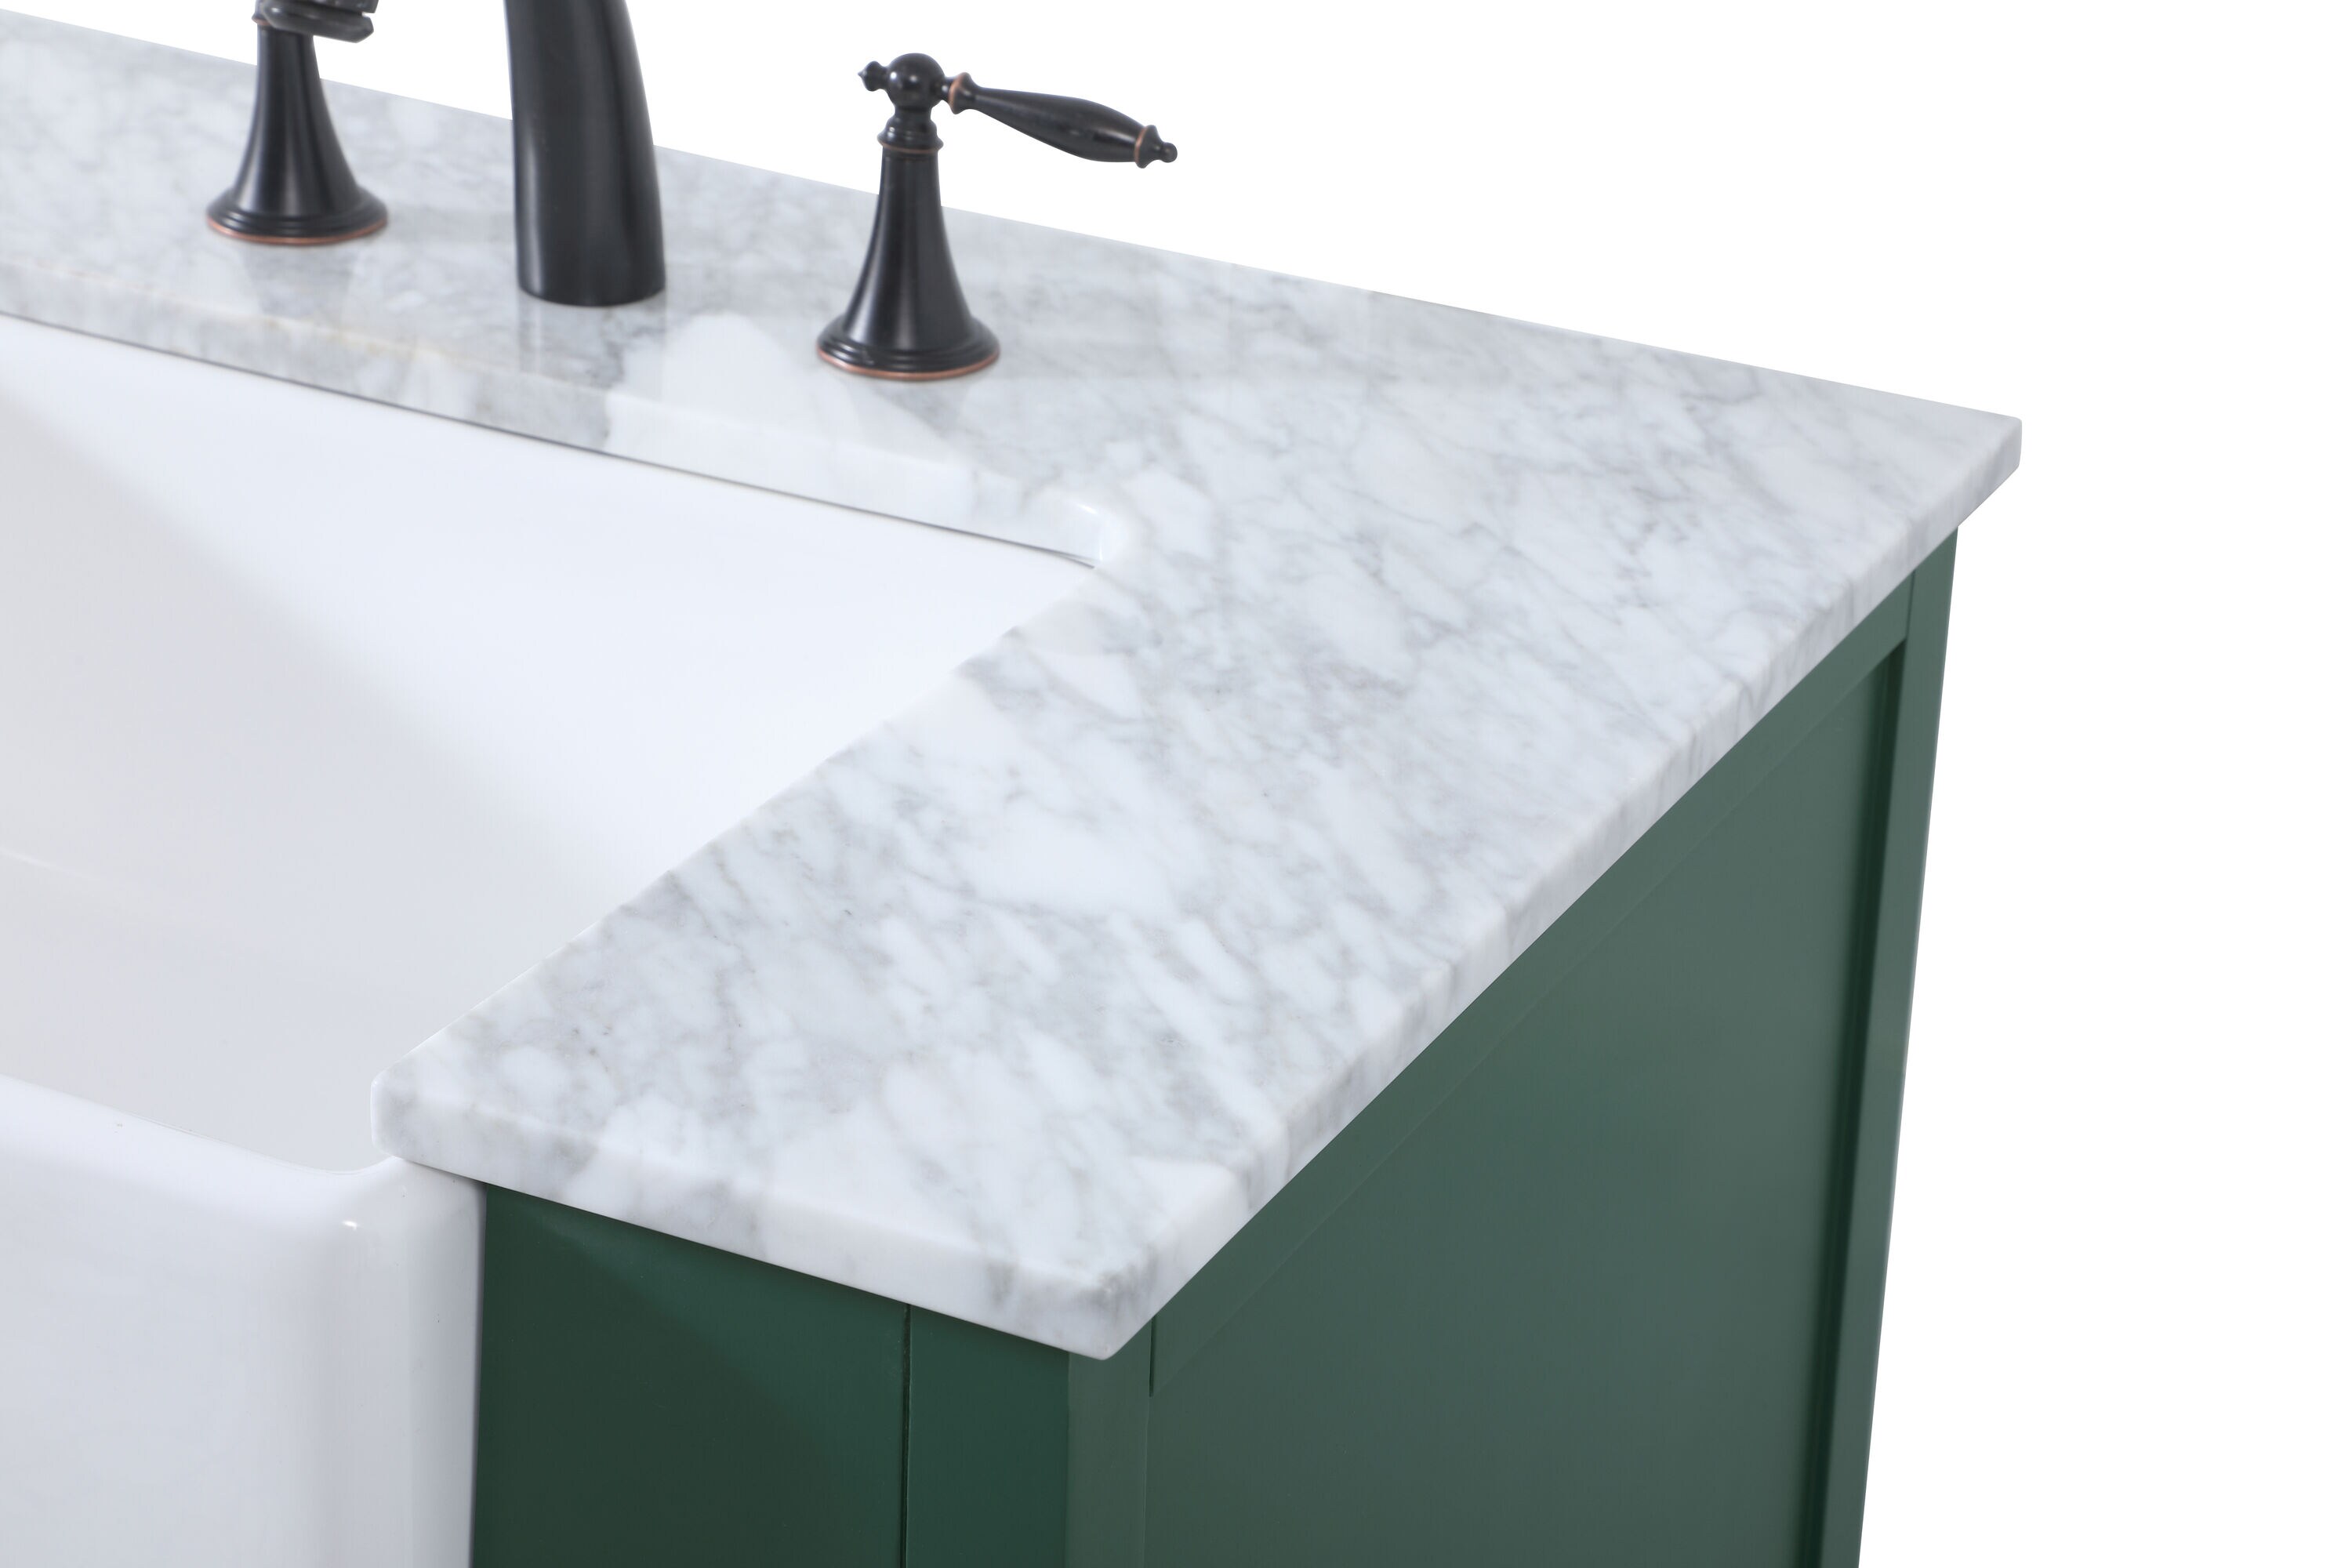 Elegant Decor Home Furnishing 72-in Green Undermount Double Sink ...